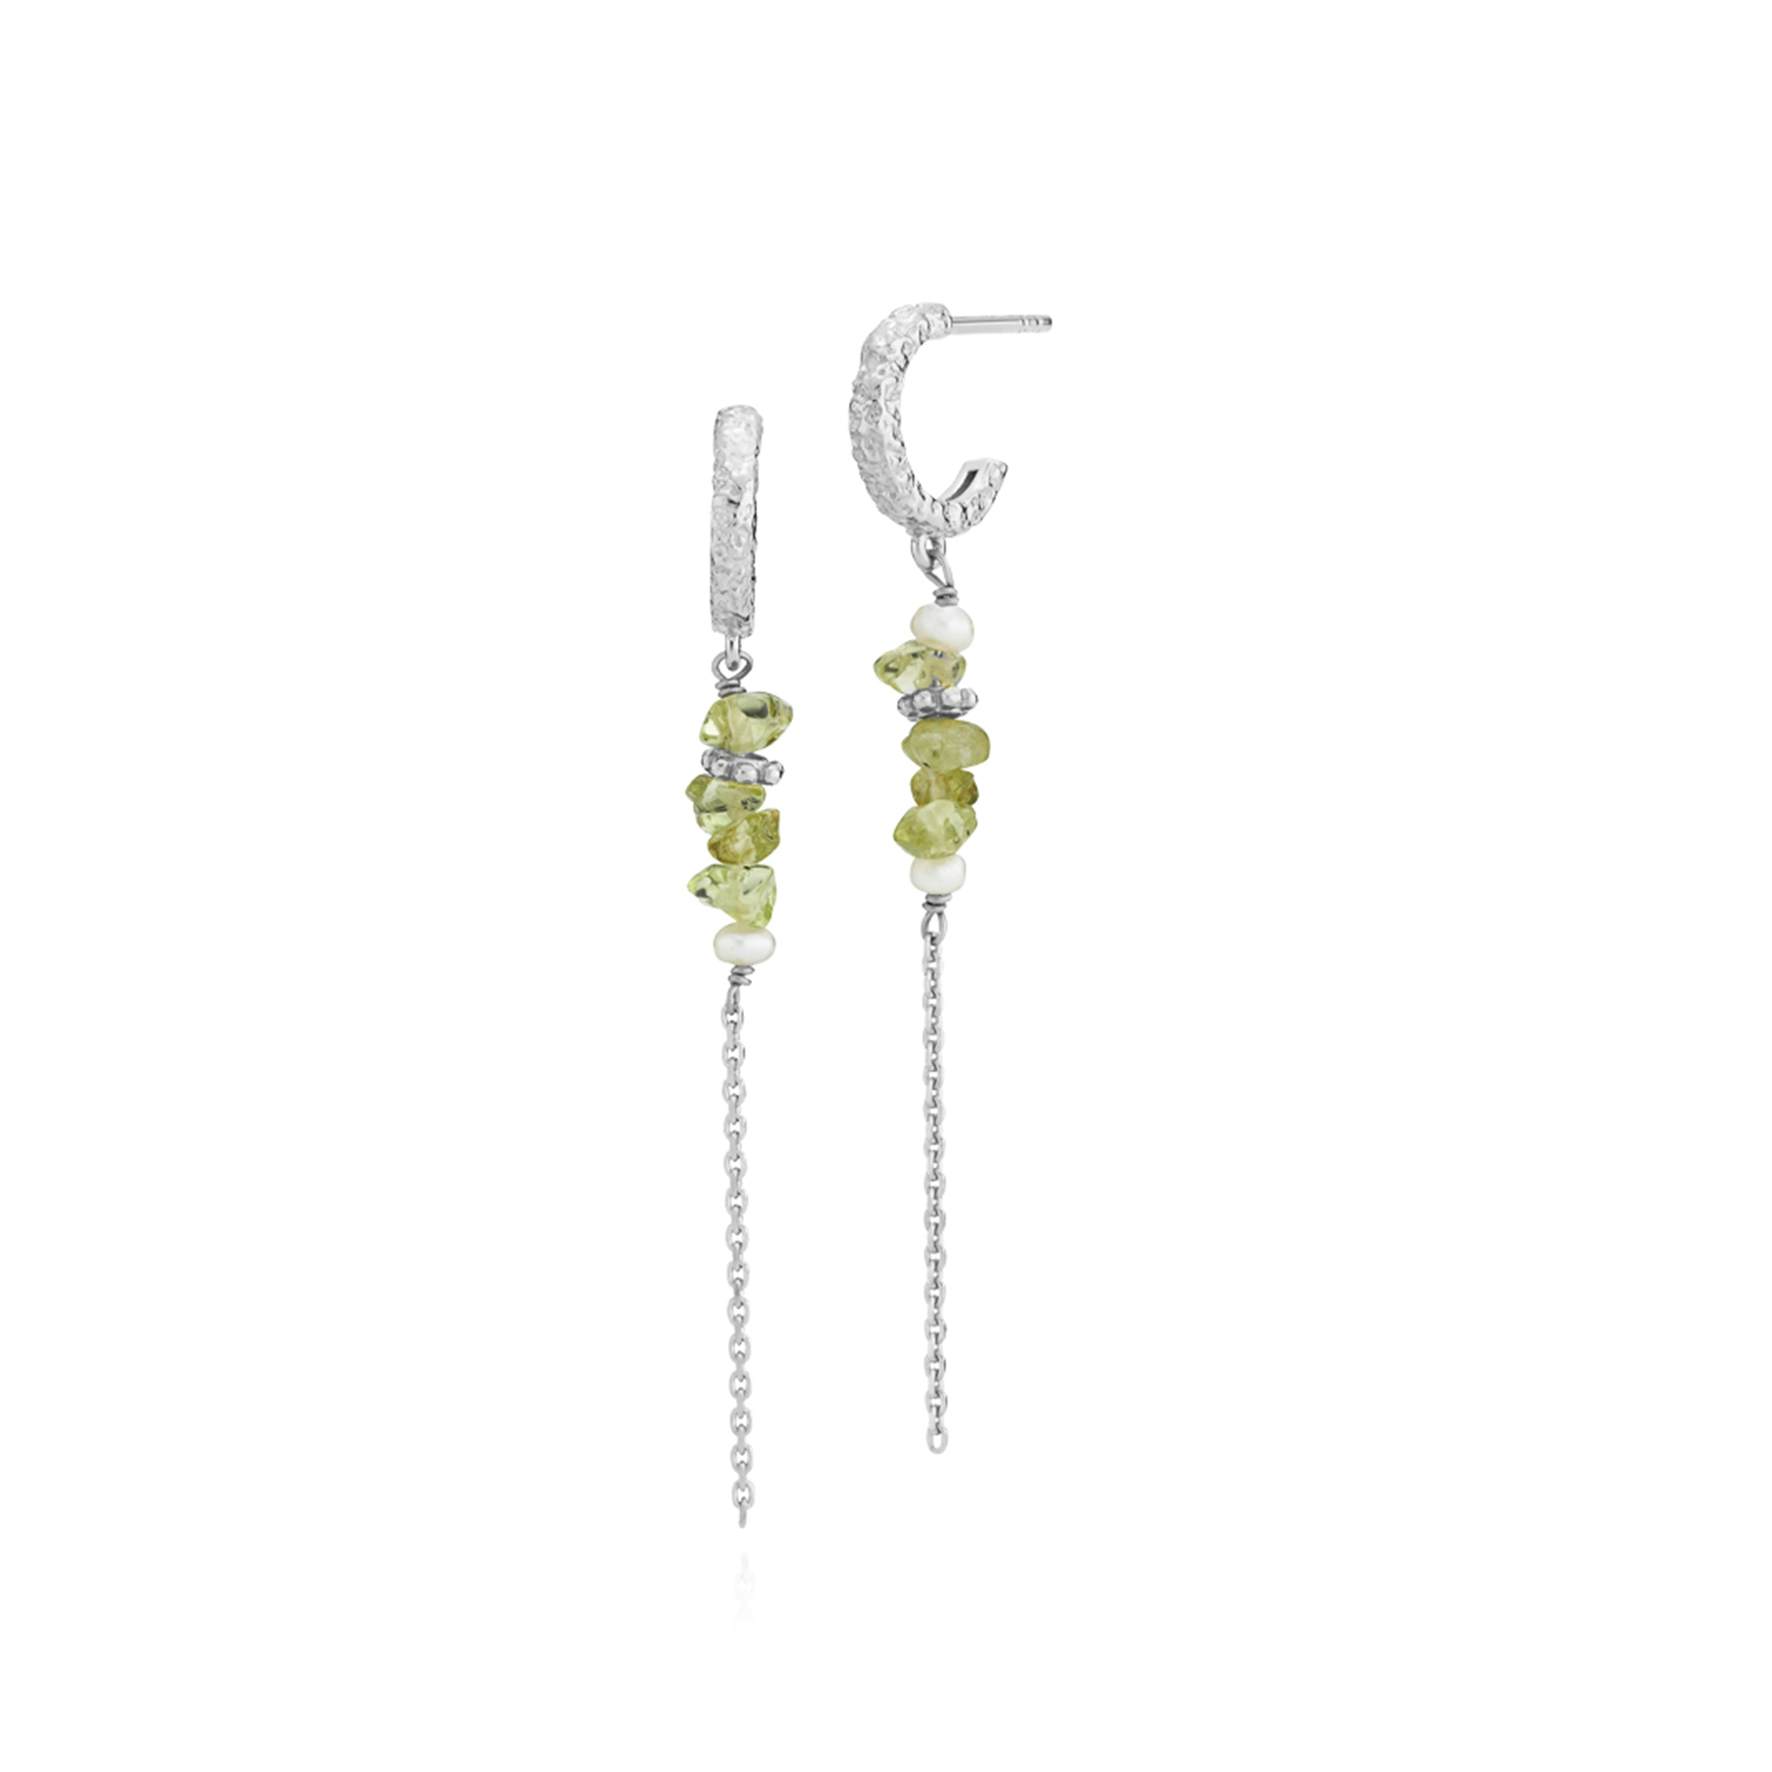 Beach Green Earrings von Sistie in Silber Sterling 925